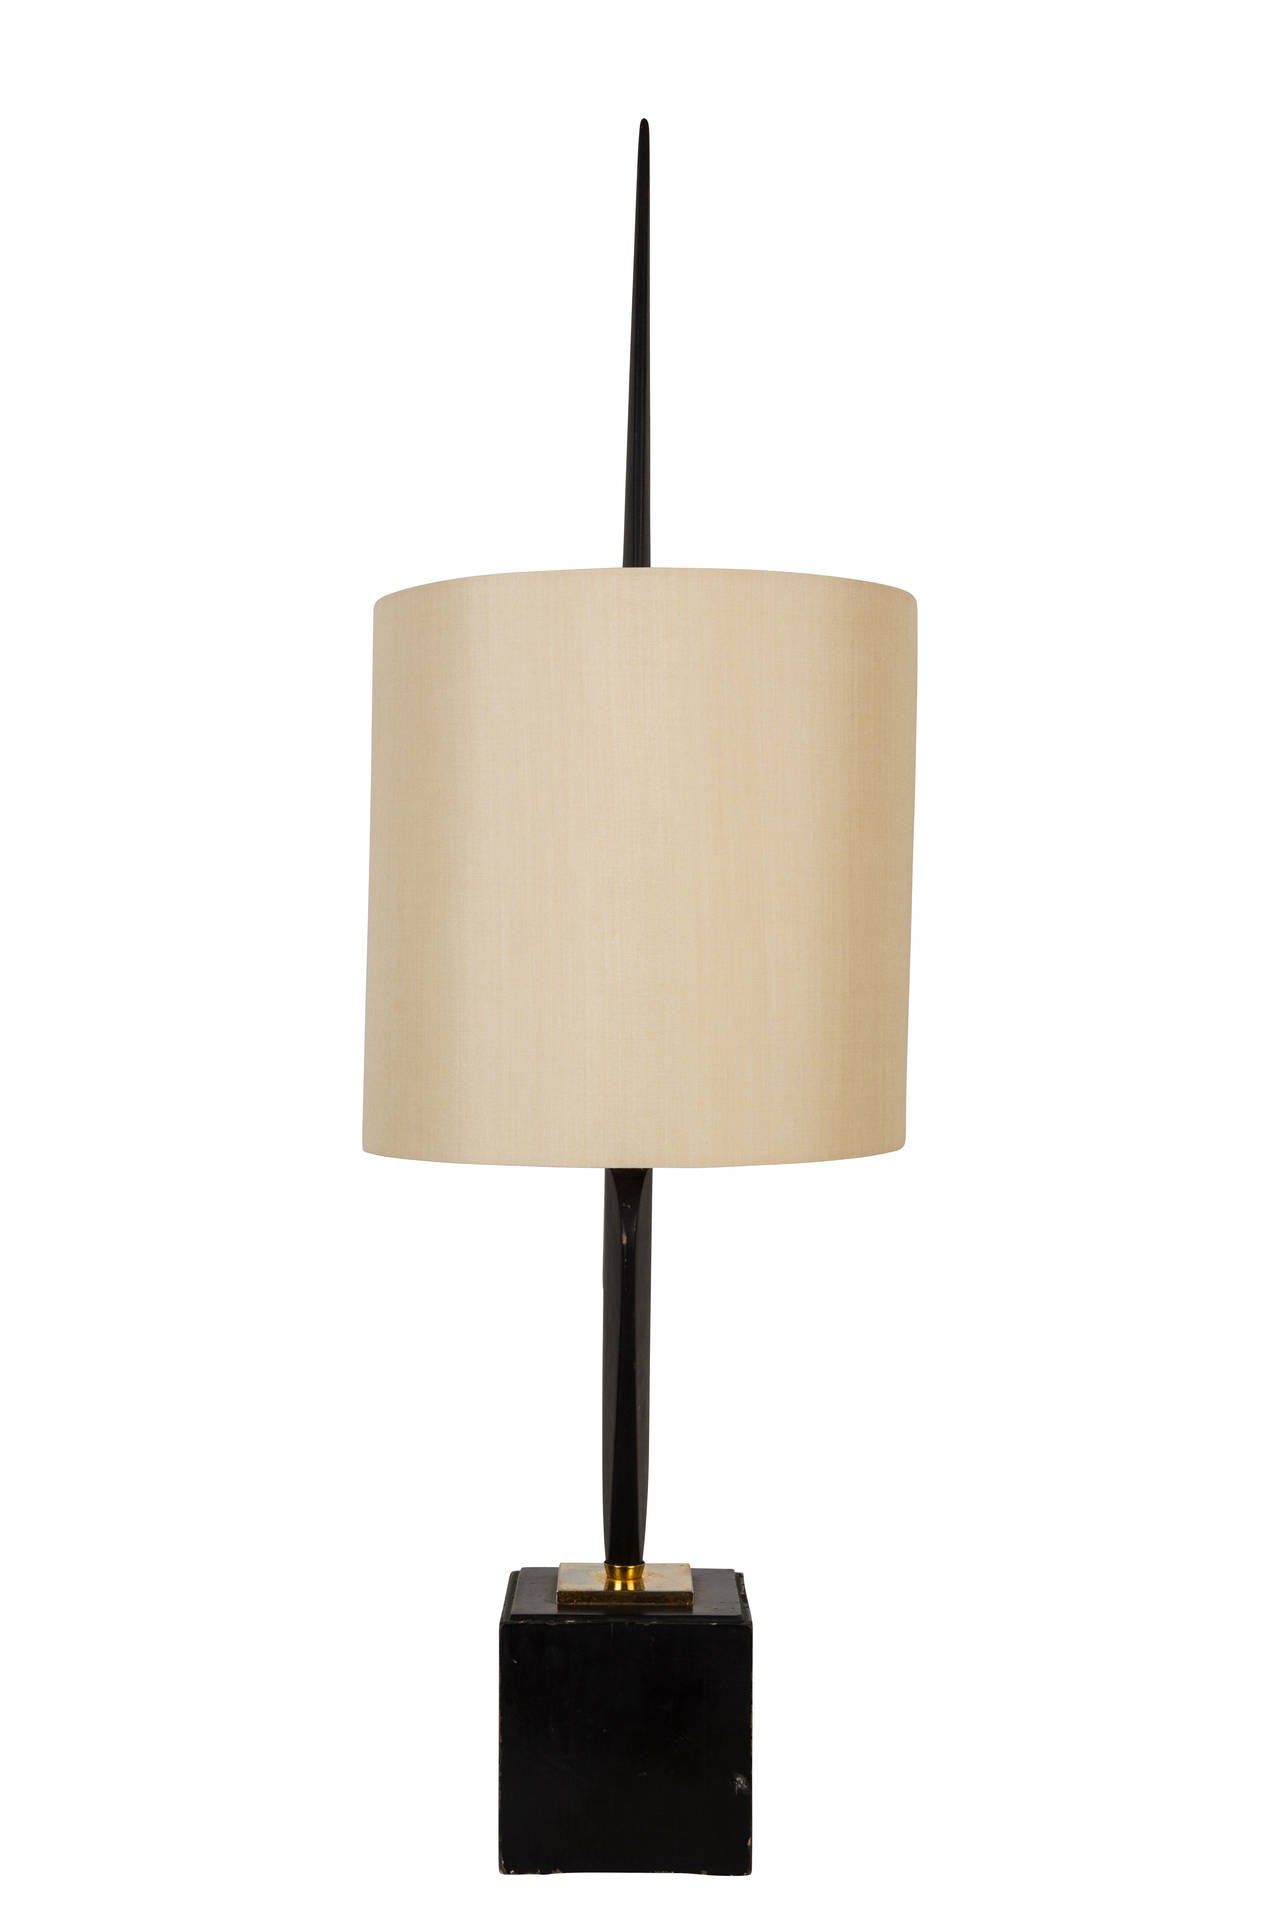 Wood table lamp with custom shade.